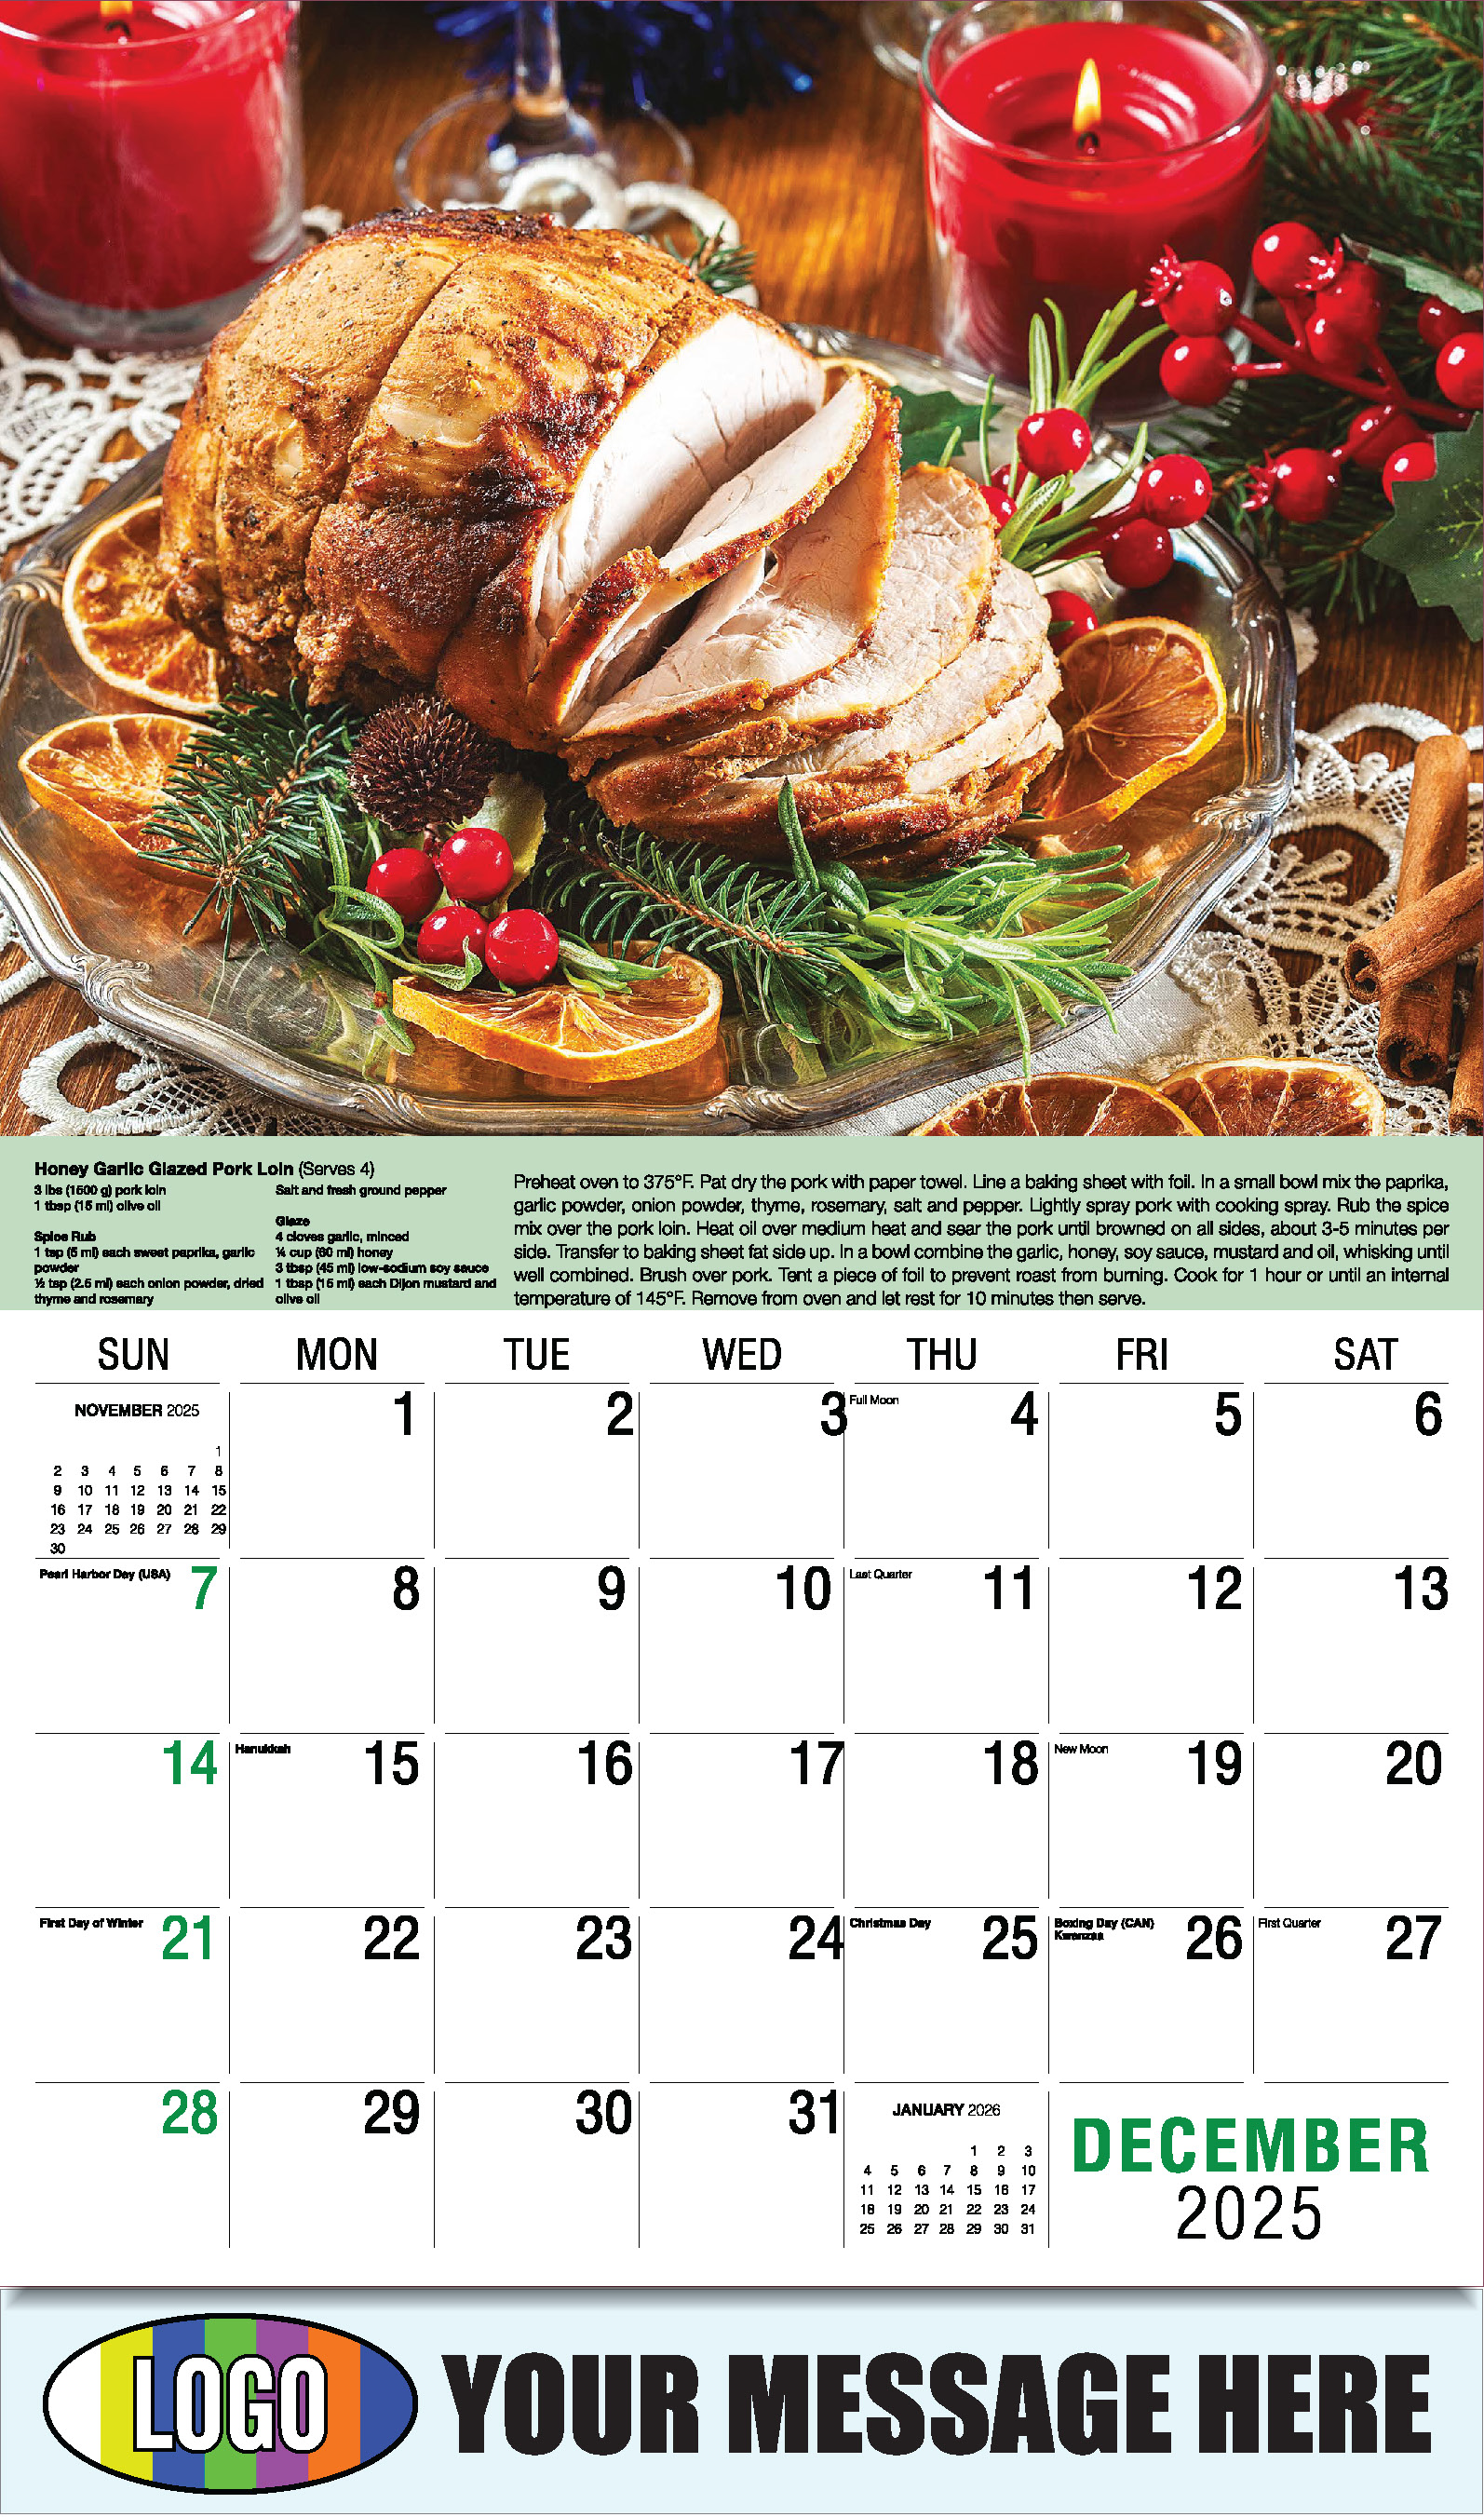 Recipes 2025 Business Promotional Calendar - December